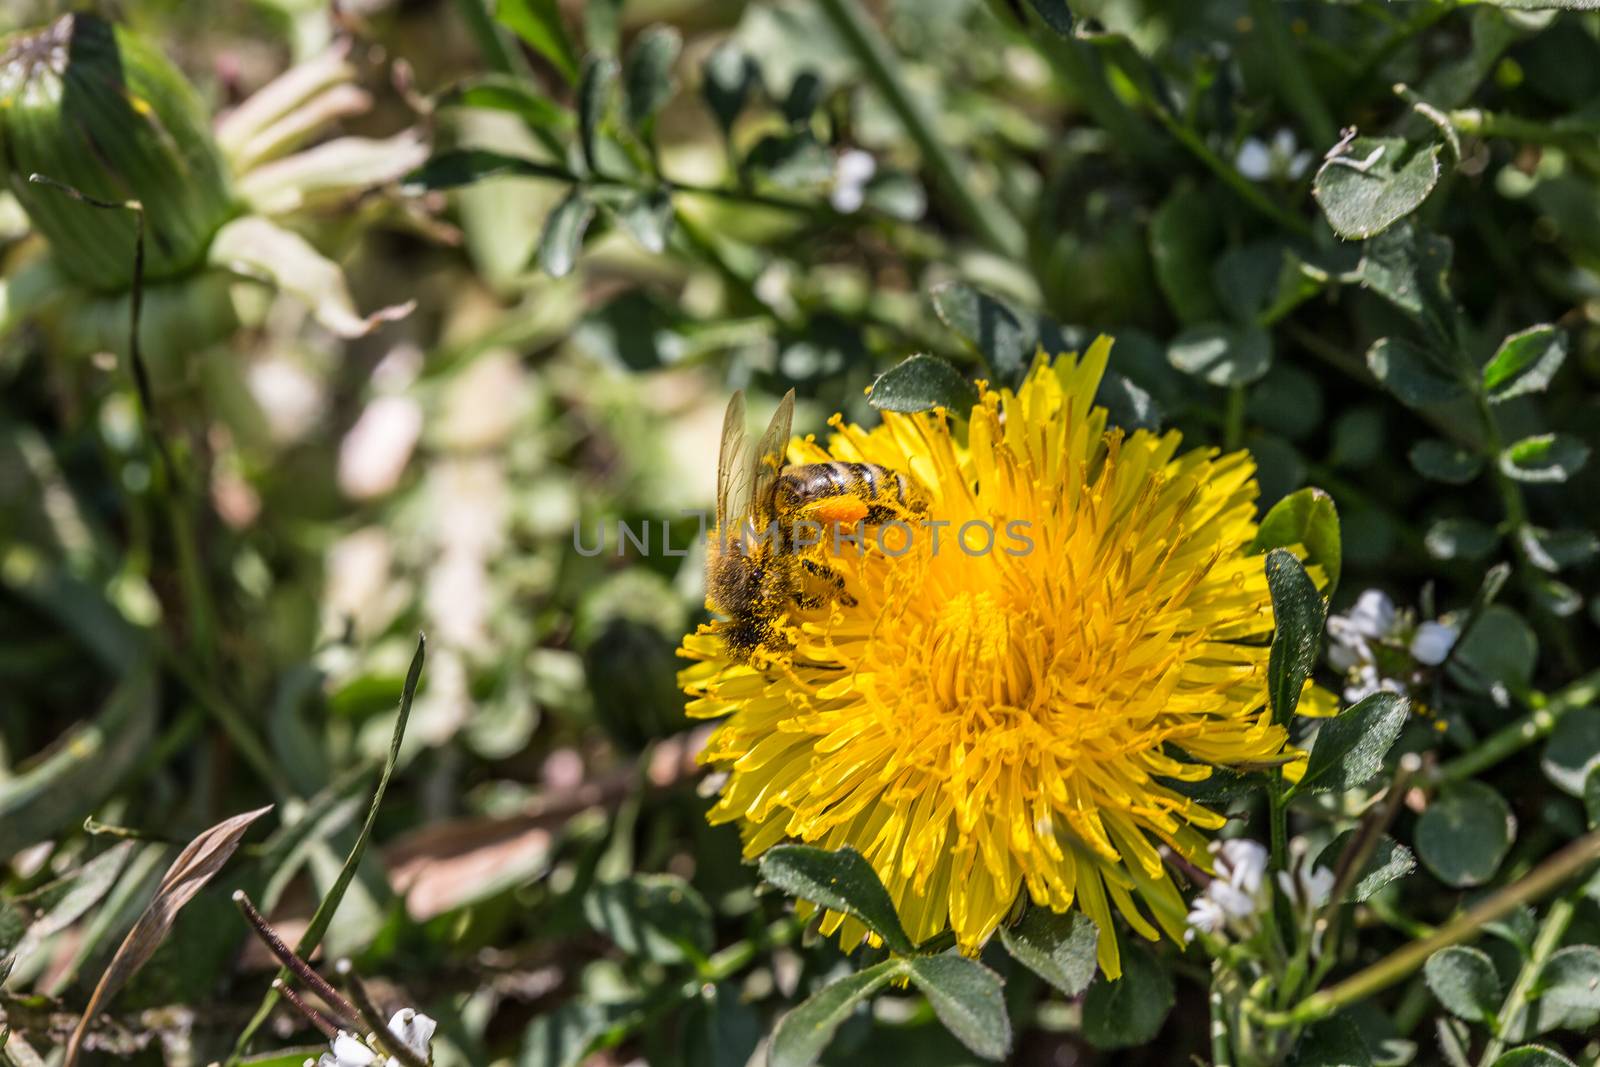 Honeybee on yellow dandelion flower by Dr-Lange